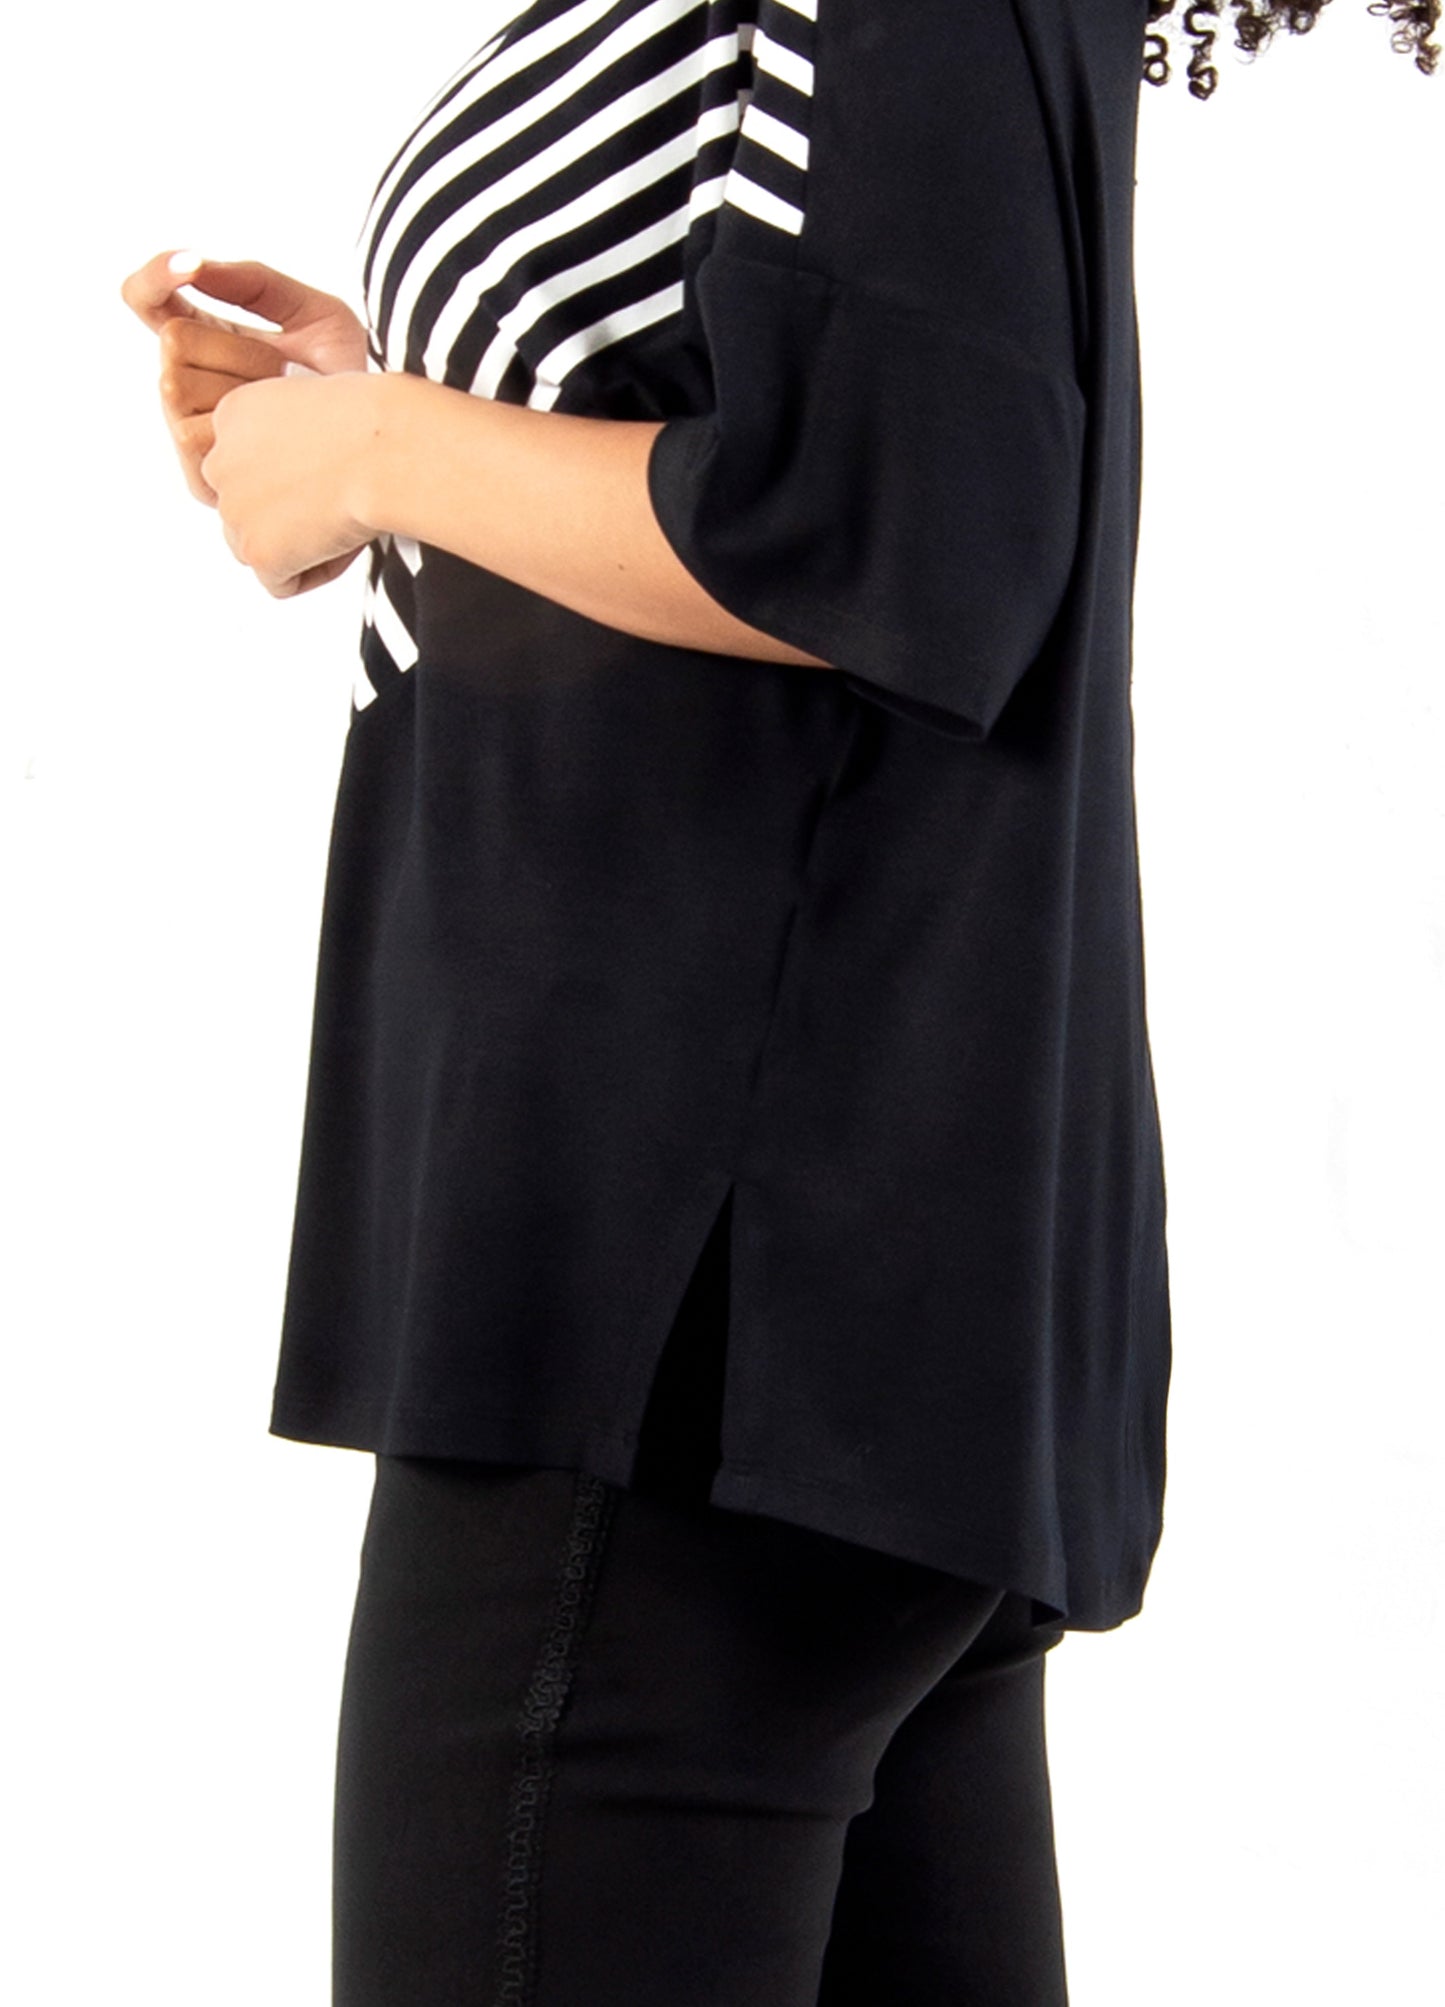 Jolie Pullover in Black and stripe